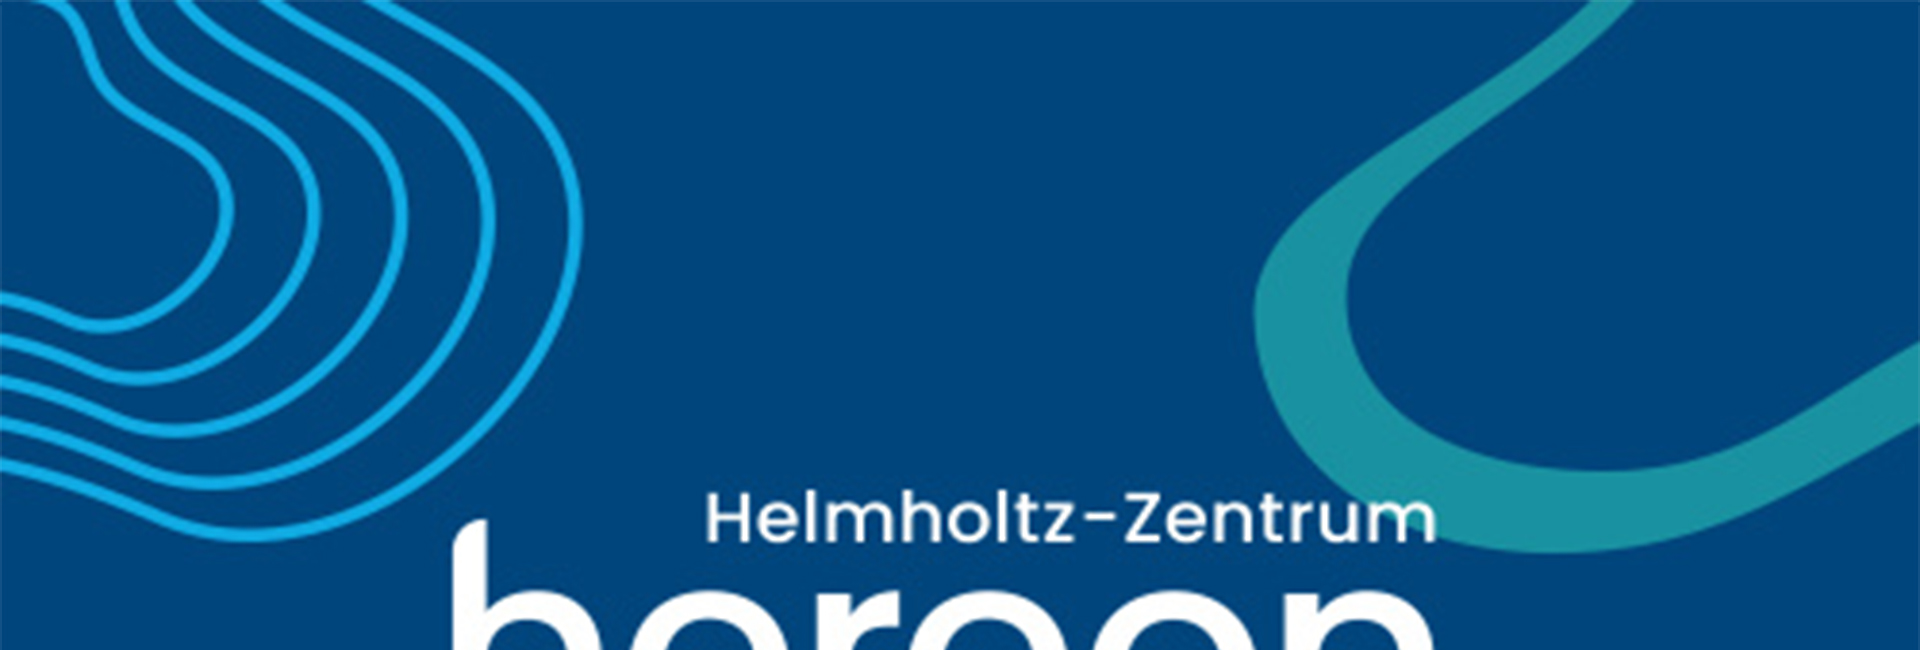 Logo Helmholtz-Zentrum Hereon